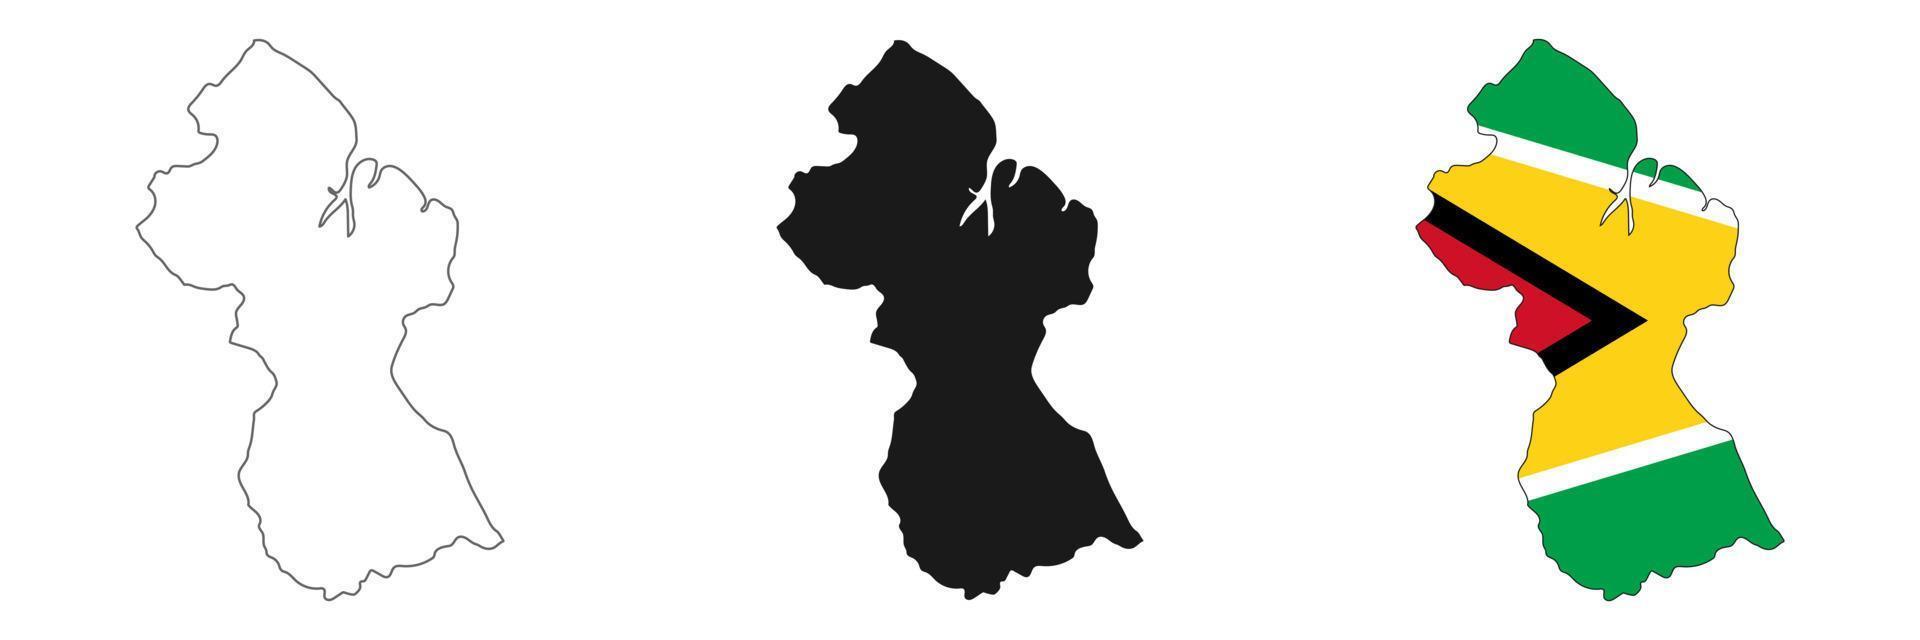 Mapa de Guyana muy detallado con bordes aislados en segundo plano. vector